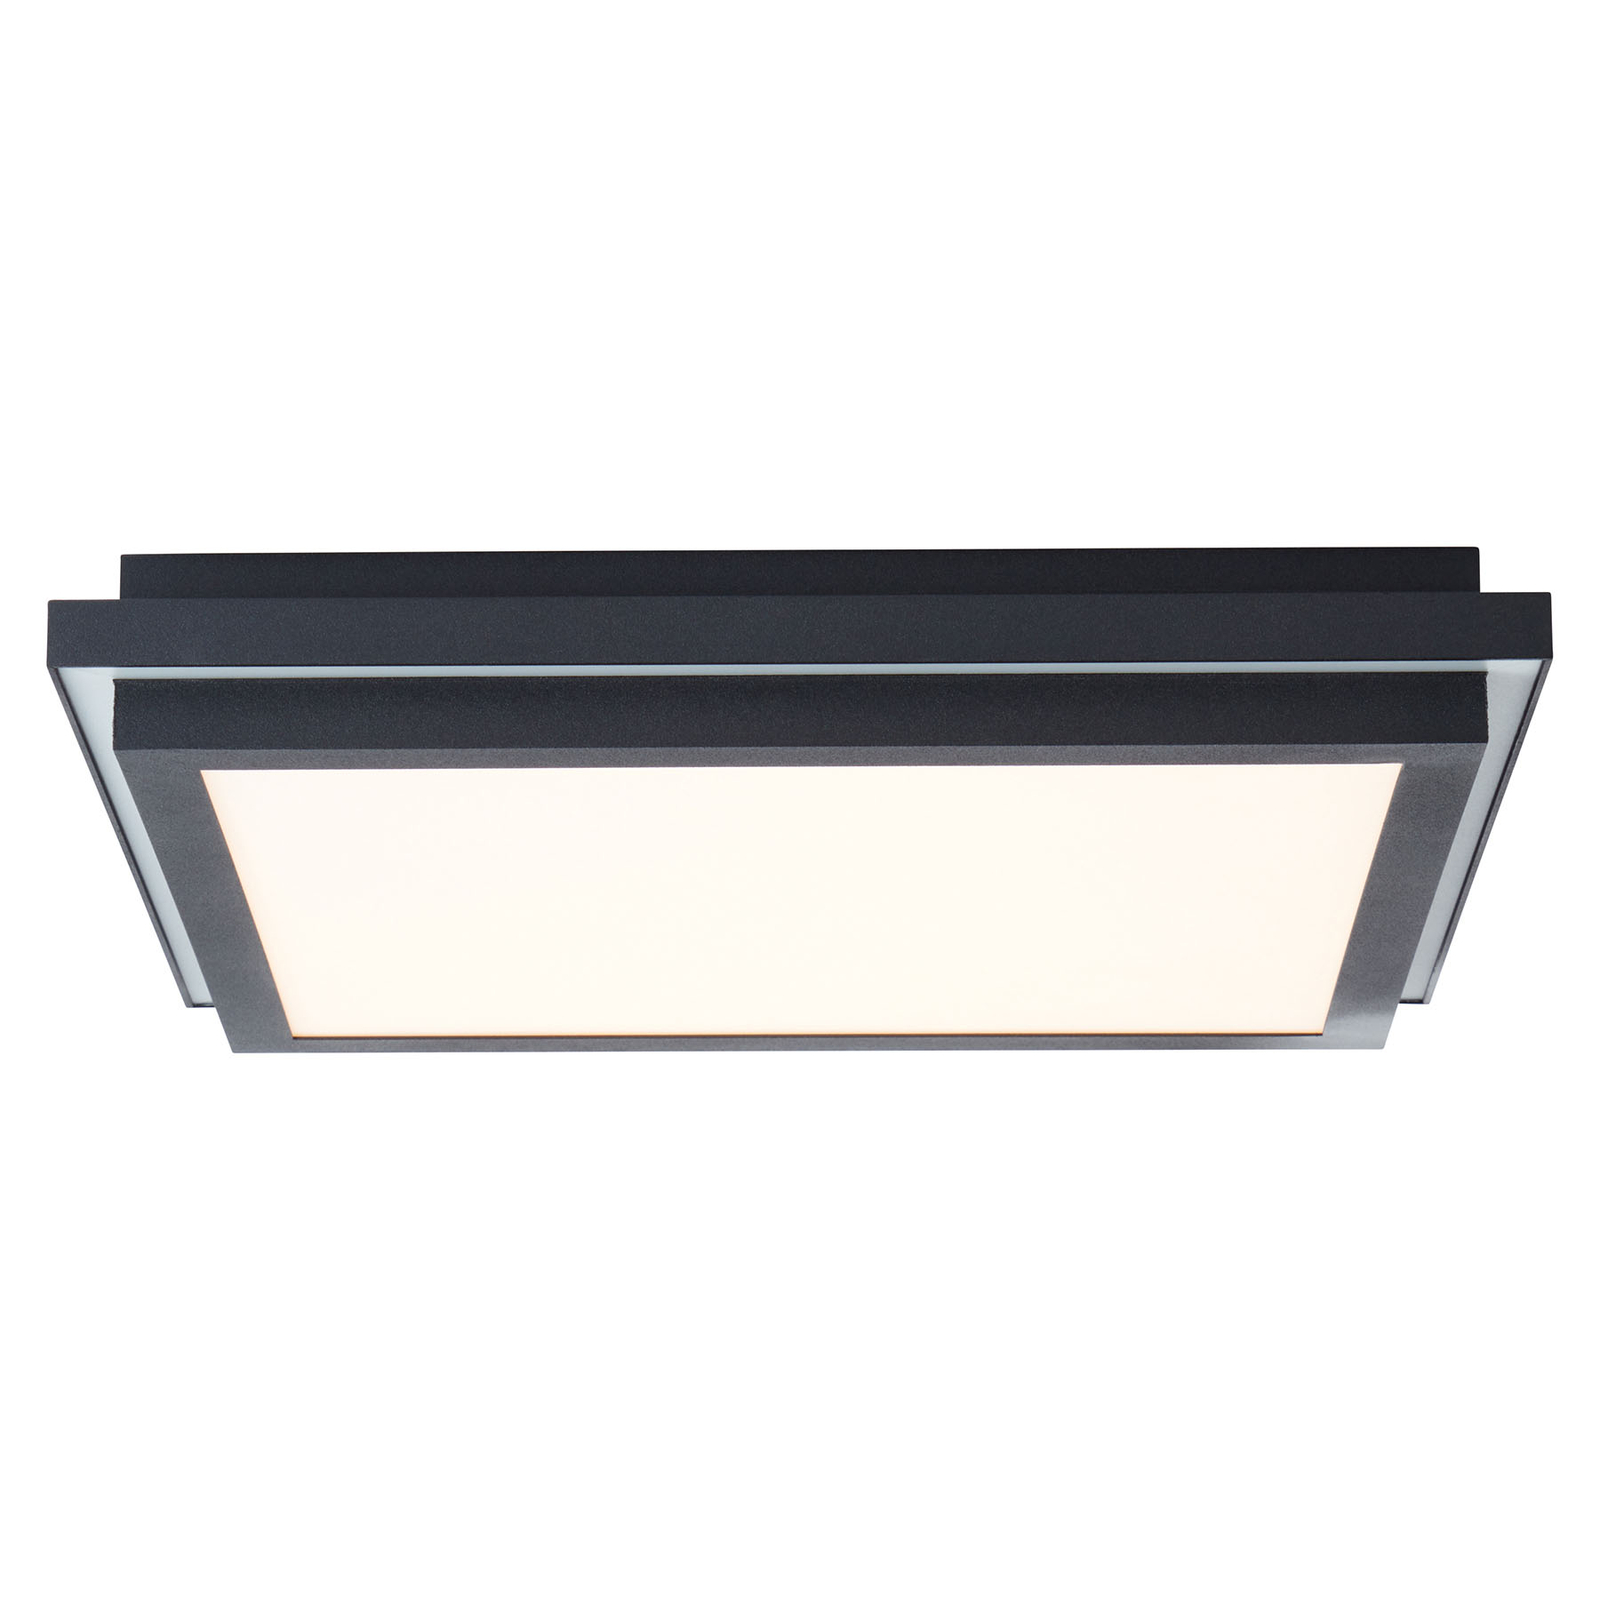 AEG Loren LED-Panel CCT dimmbar, schwarz, 40x40cm